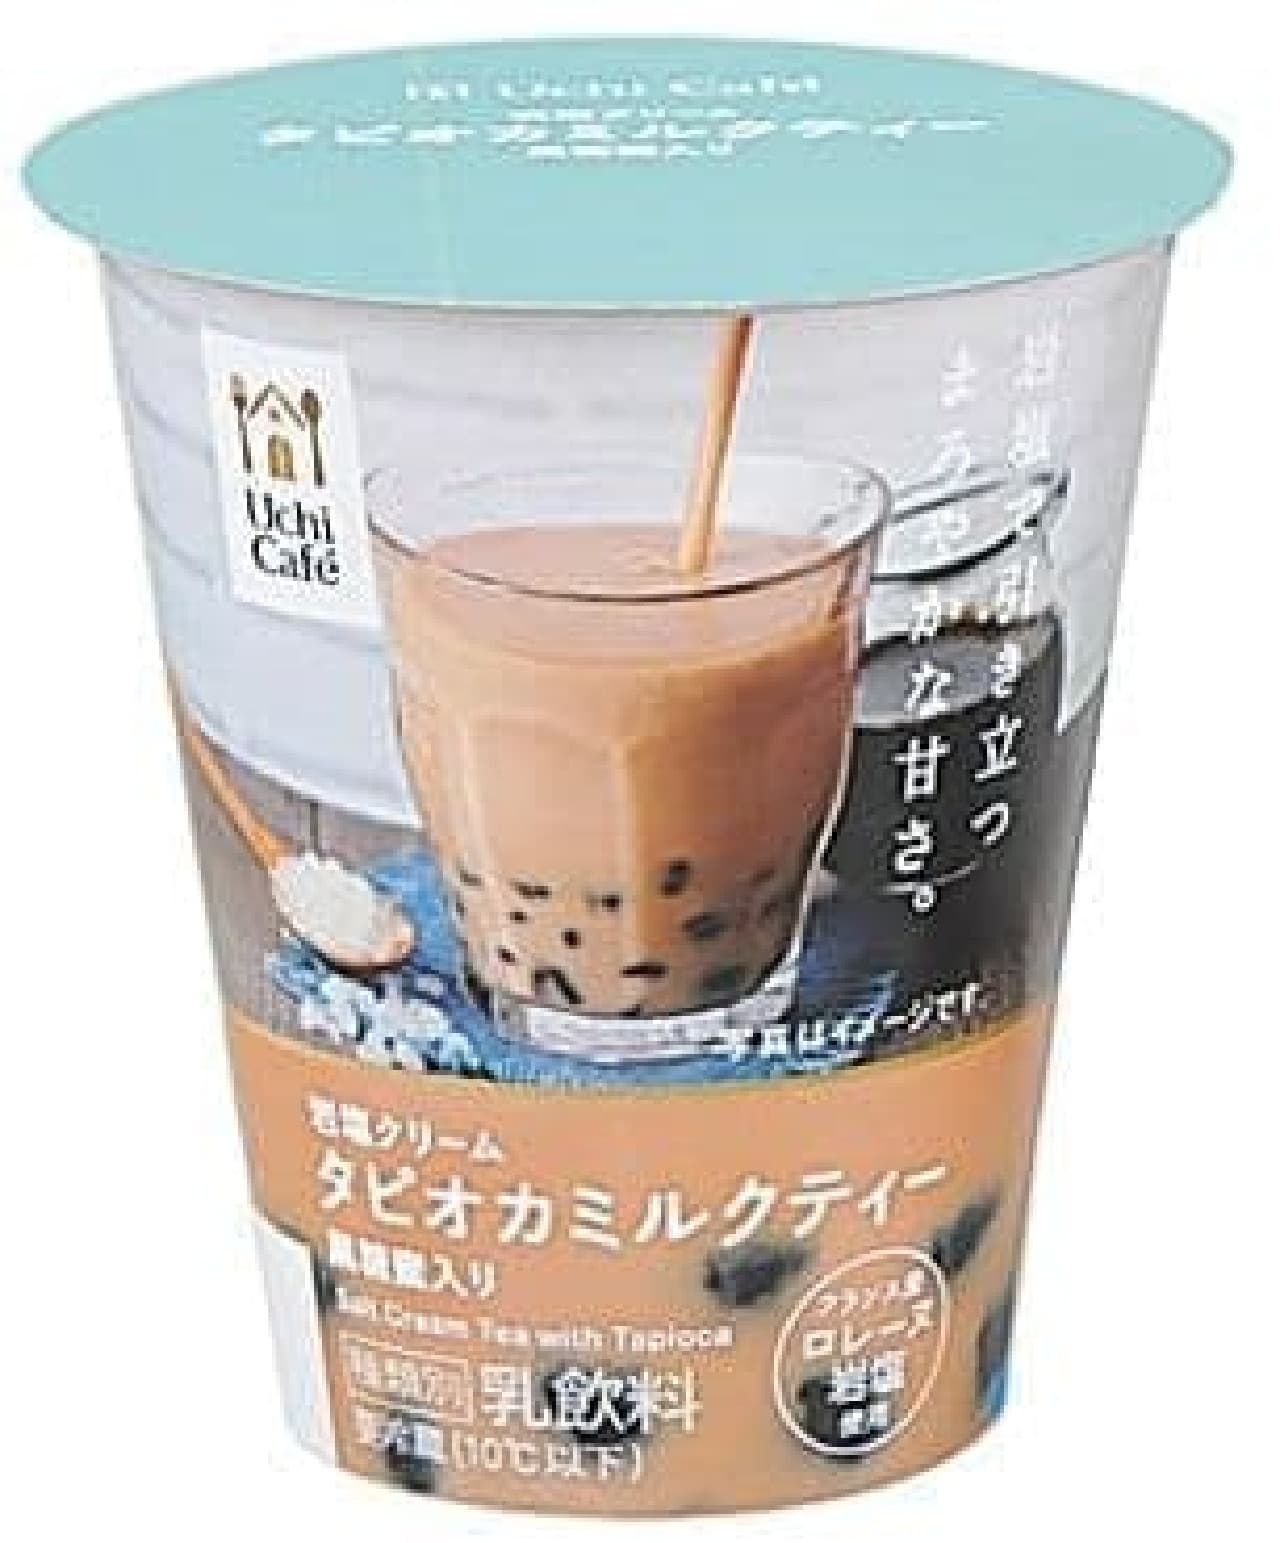 Lawson "Uchi Cafe Rock Salt Cream Tapioca Milk Tea with Brown Sugar Honey 255g"